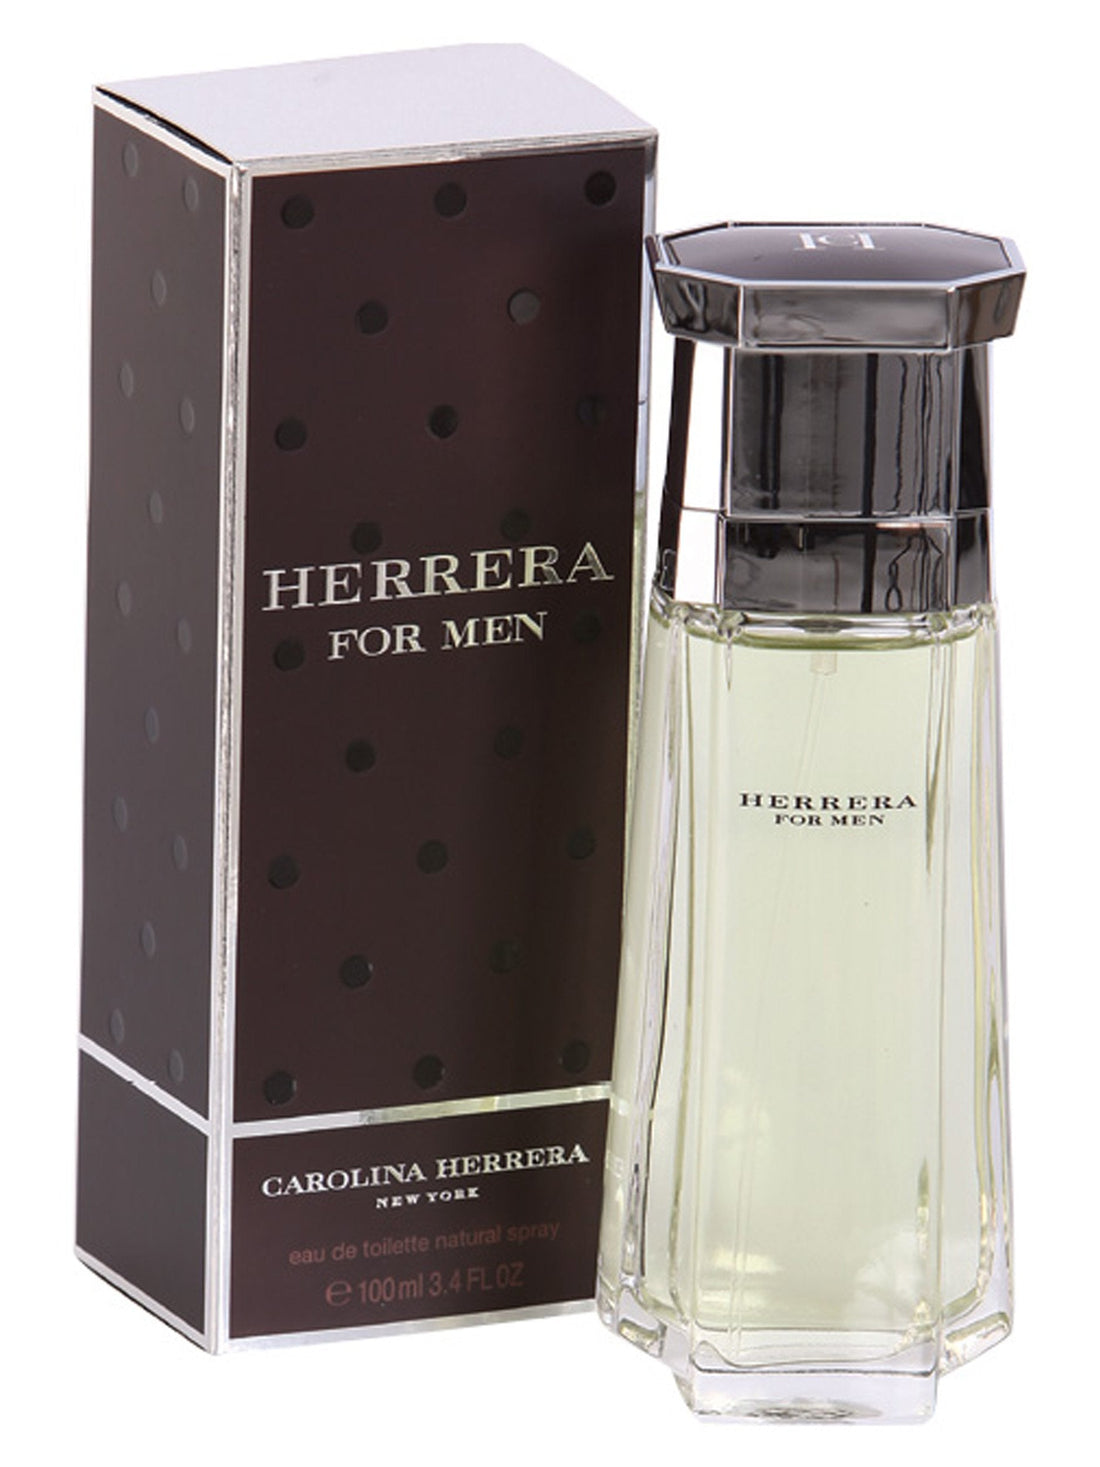 Perfume para Caballero CAROLINA HERRERA * HERRERA FOR MEN 3.4 OZ EDT SPRAY